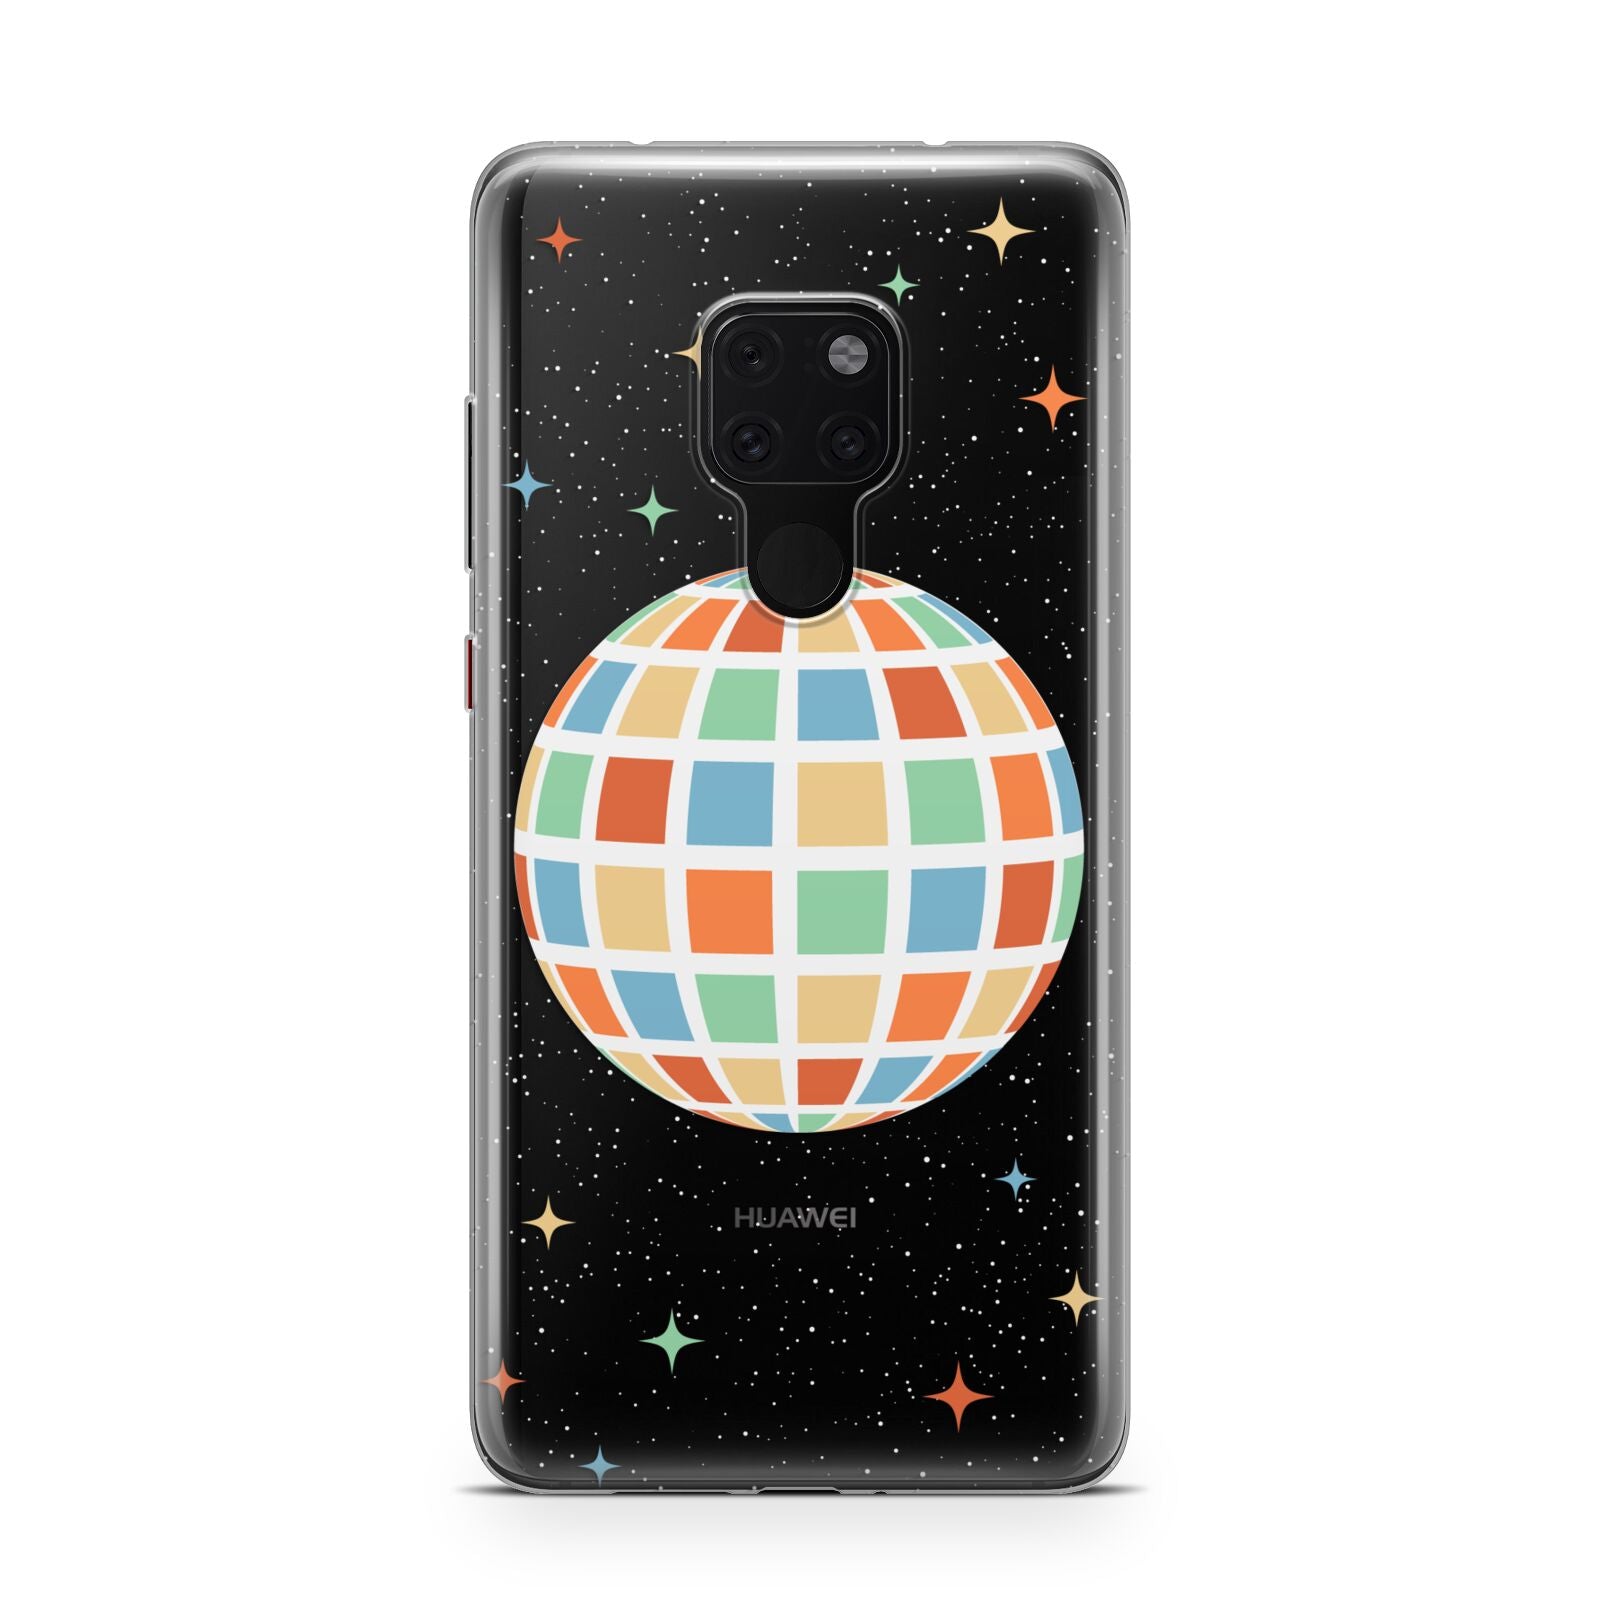 Disco Ball Huawei Mate 20 Phone Case